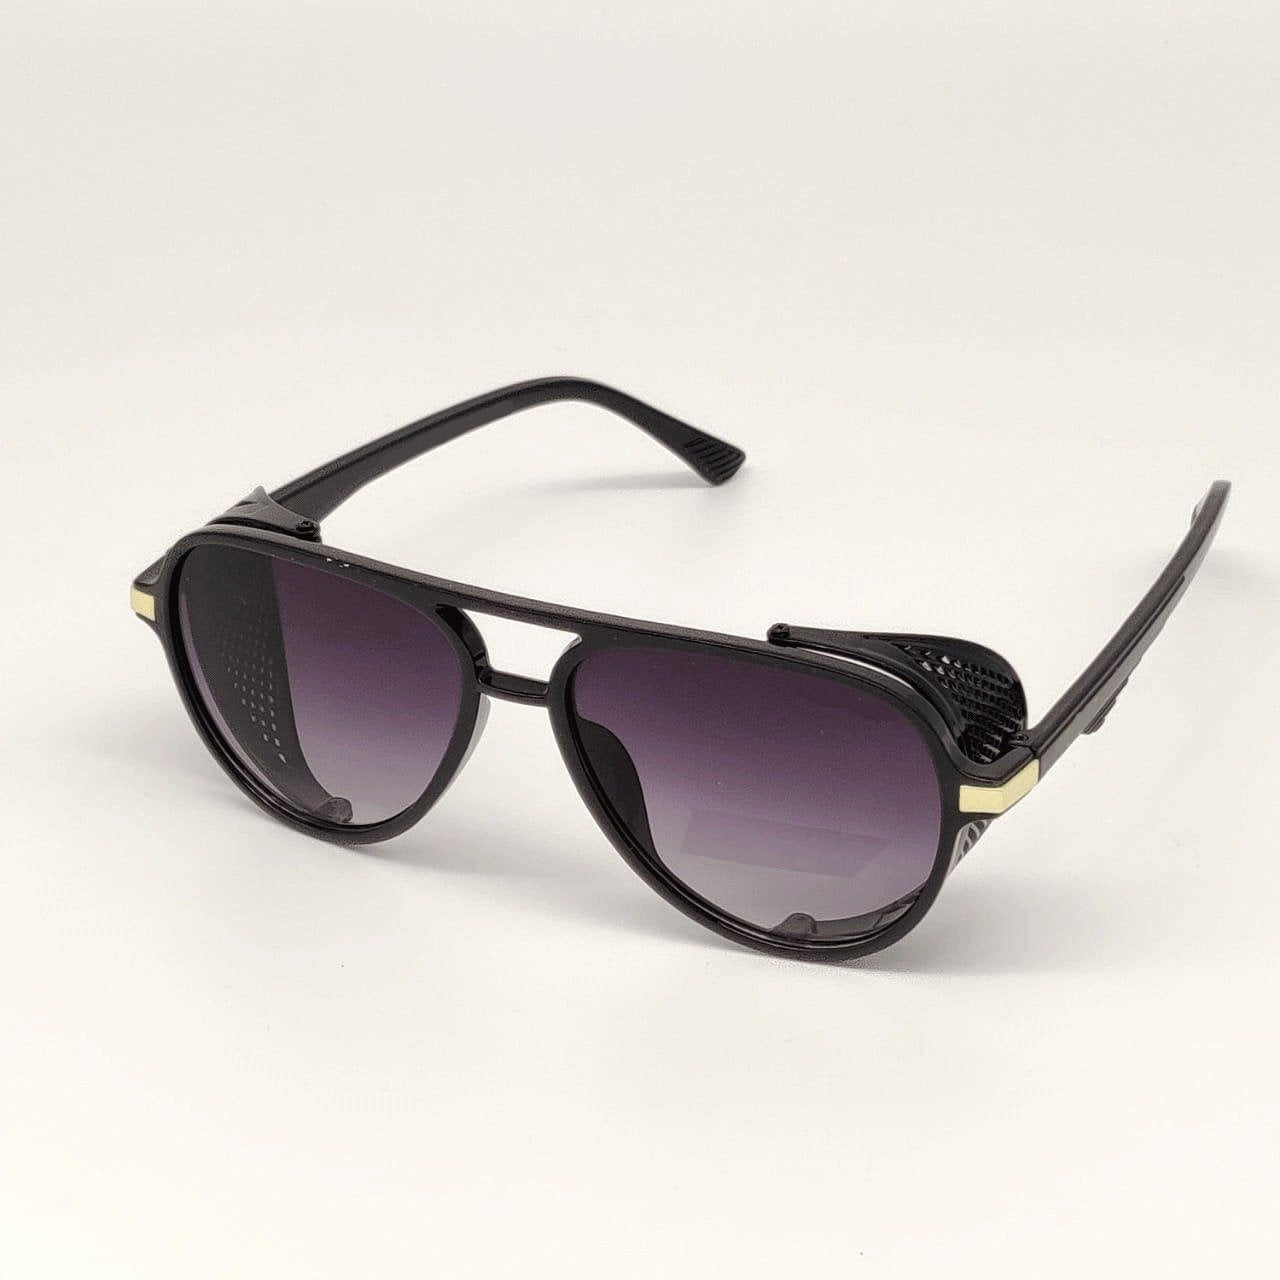 Trendy Cap Aviator Sunglasses For Men And Women-Unique and Classy